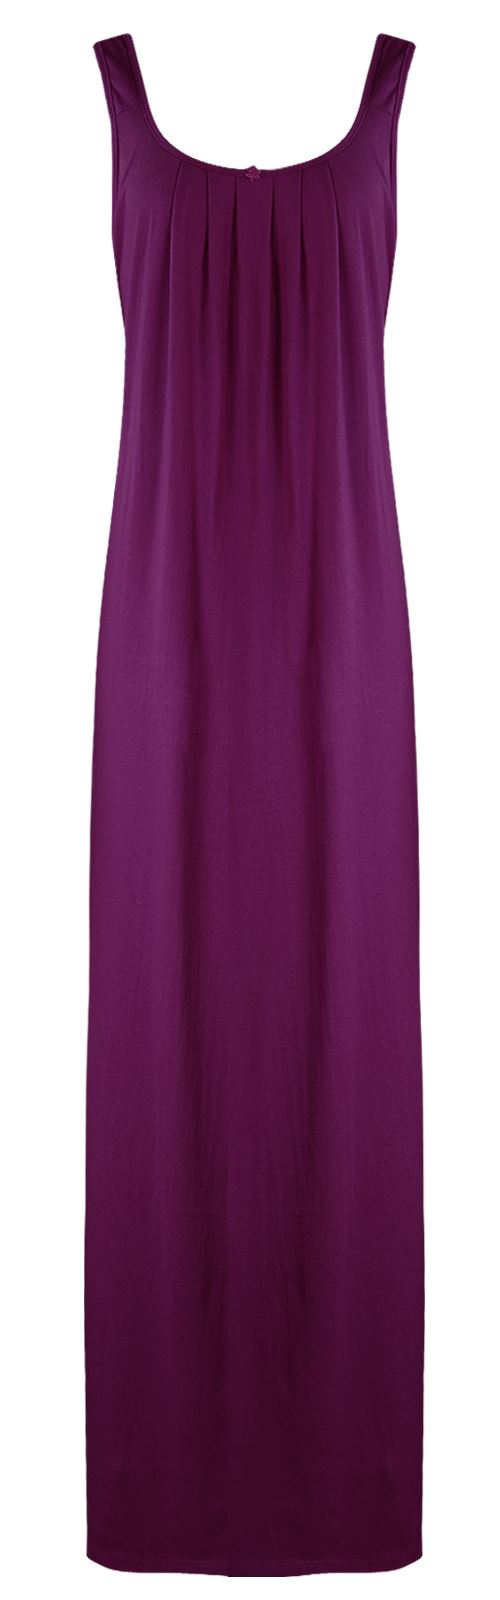 Purple- Plain / One Size Cotton Nighty Slip Heart Print / Plain Night Gown Free Size The Orange Tags